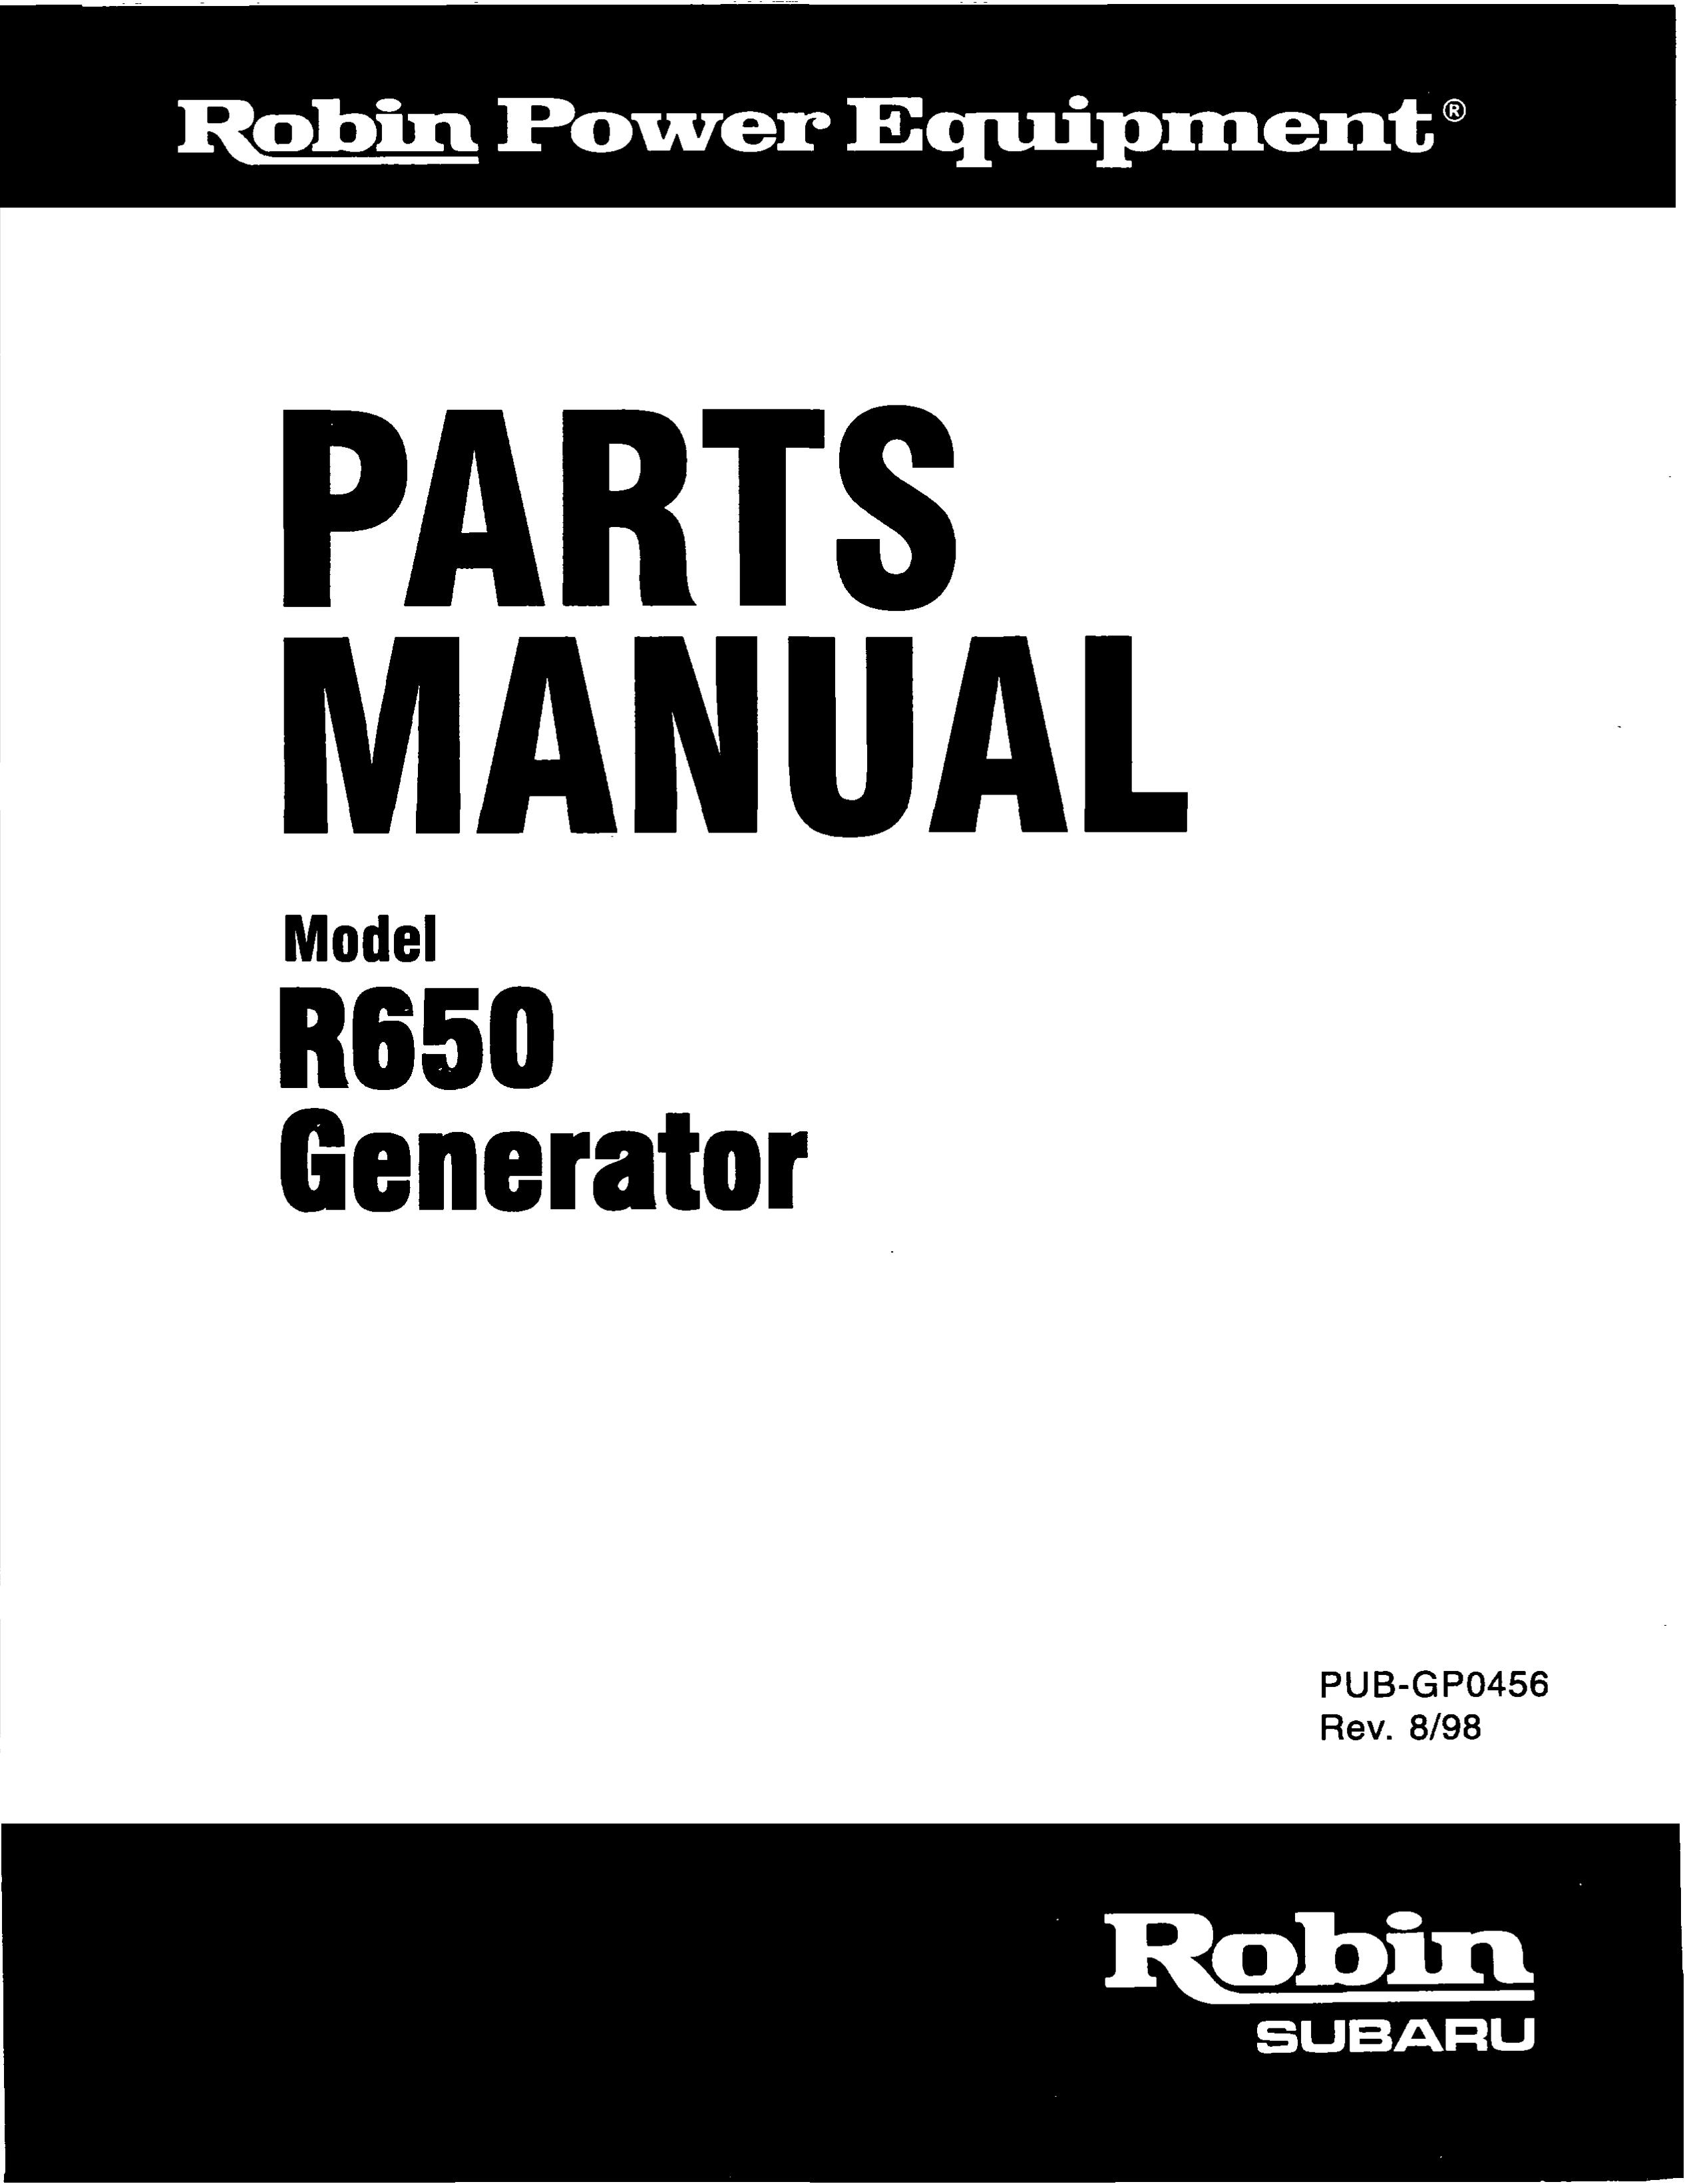 Subaru Robin Power Products R650 Portable Generator User Manual